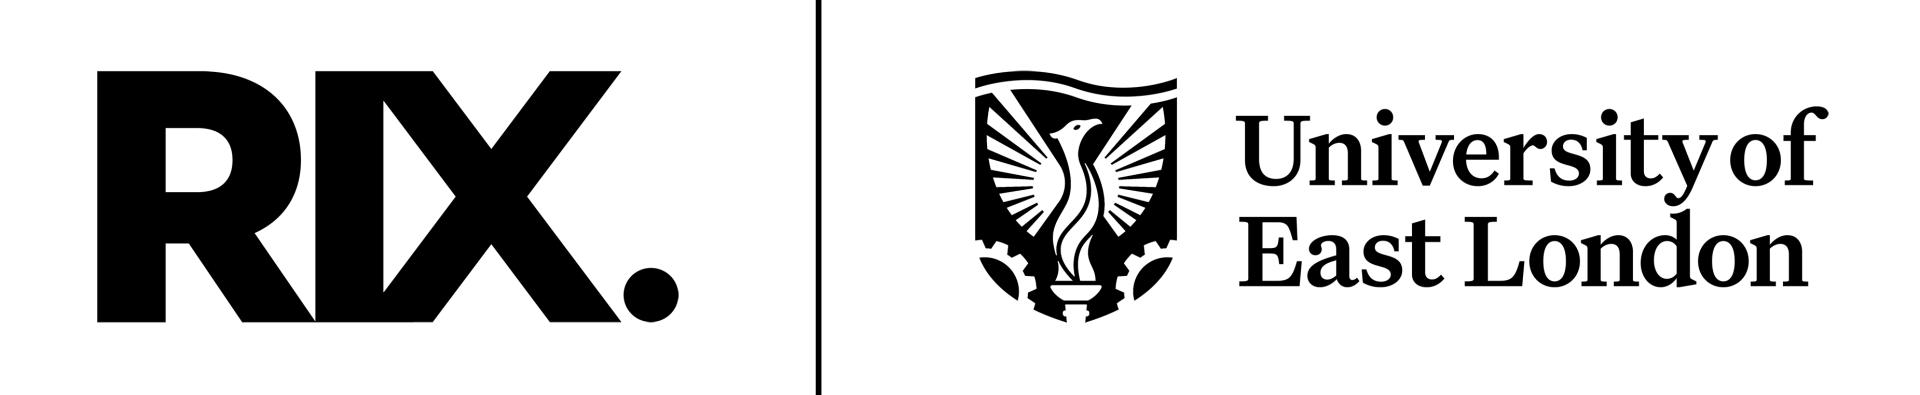 RIX-UEL logos black (002)